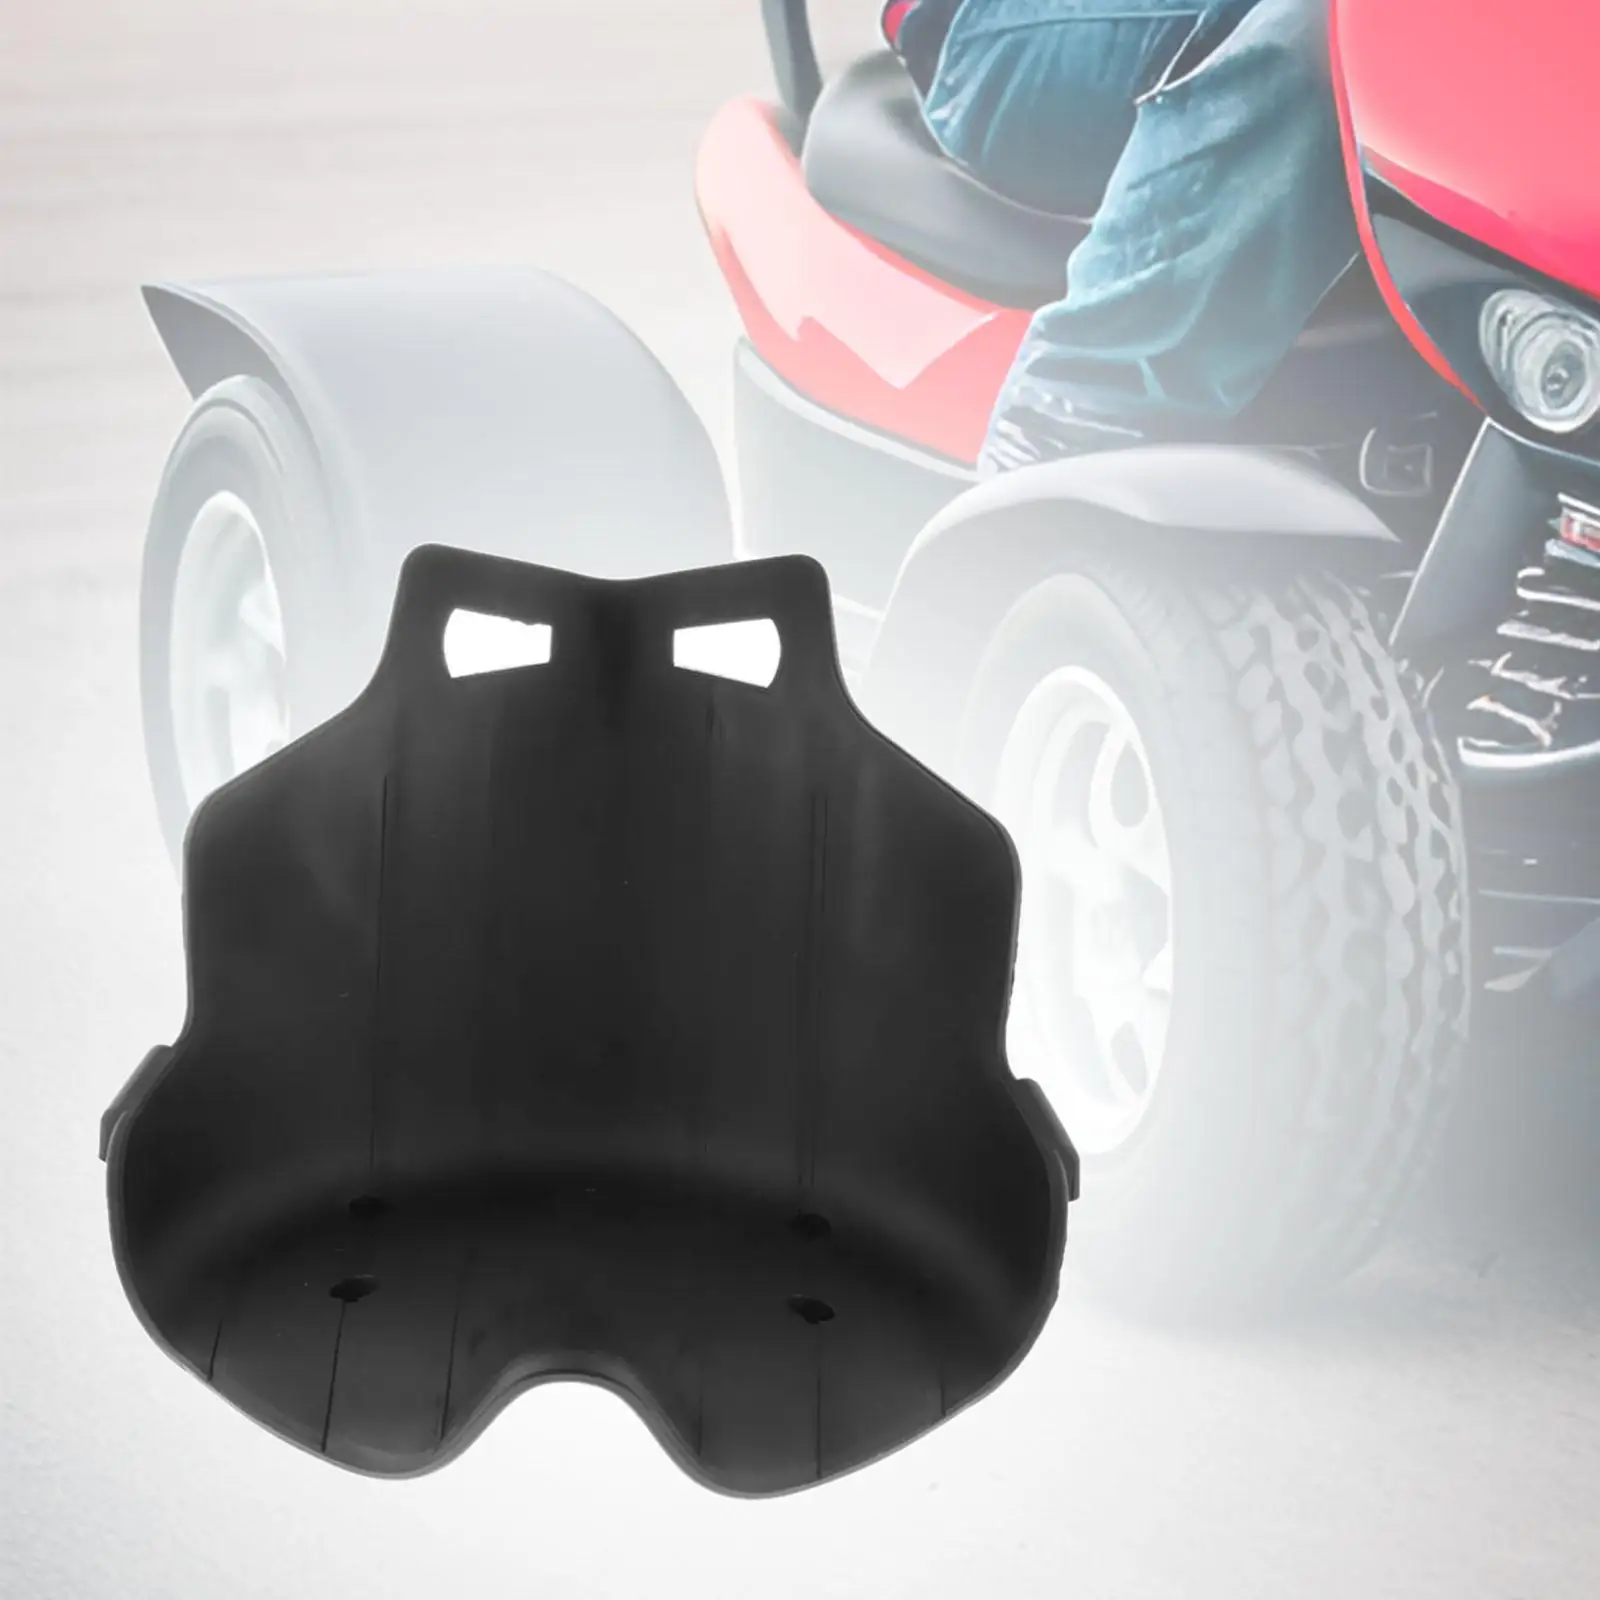 Go Kart Car Seat Portable Outdoors for Racing Balancing Vehicle Drift Trikes Seat Saddle